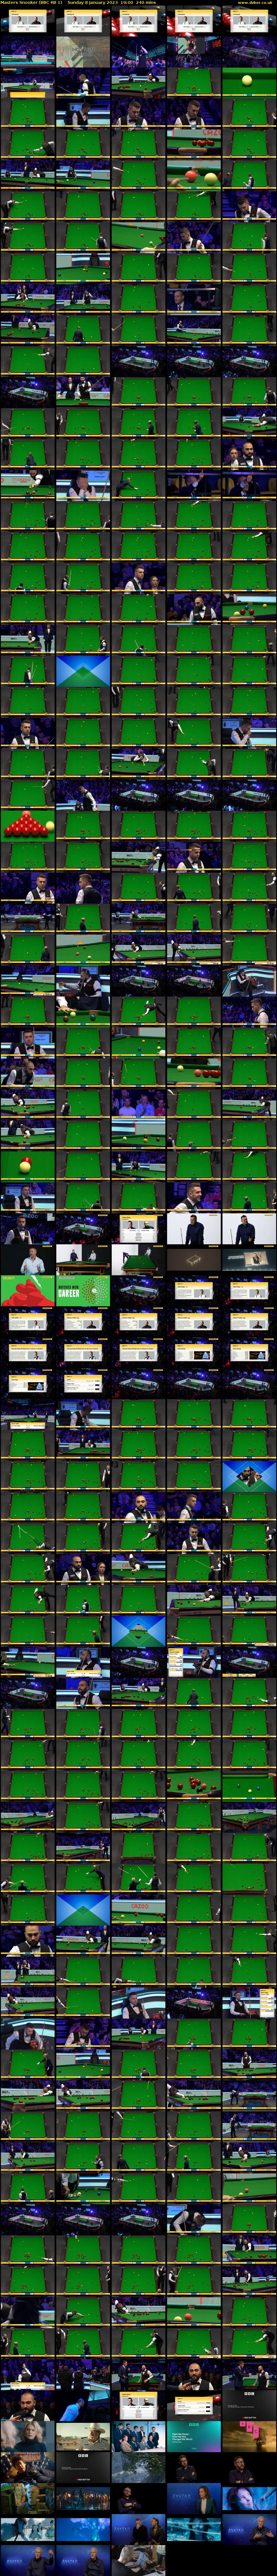 Masters Snooker (BBC RB 1) Sunday 8 January 2023 19:00 - 23:00